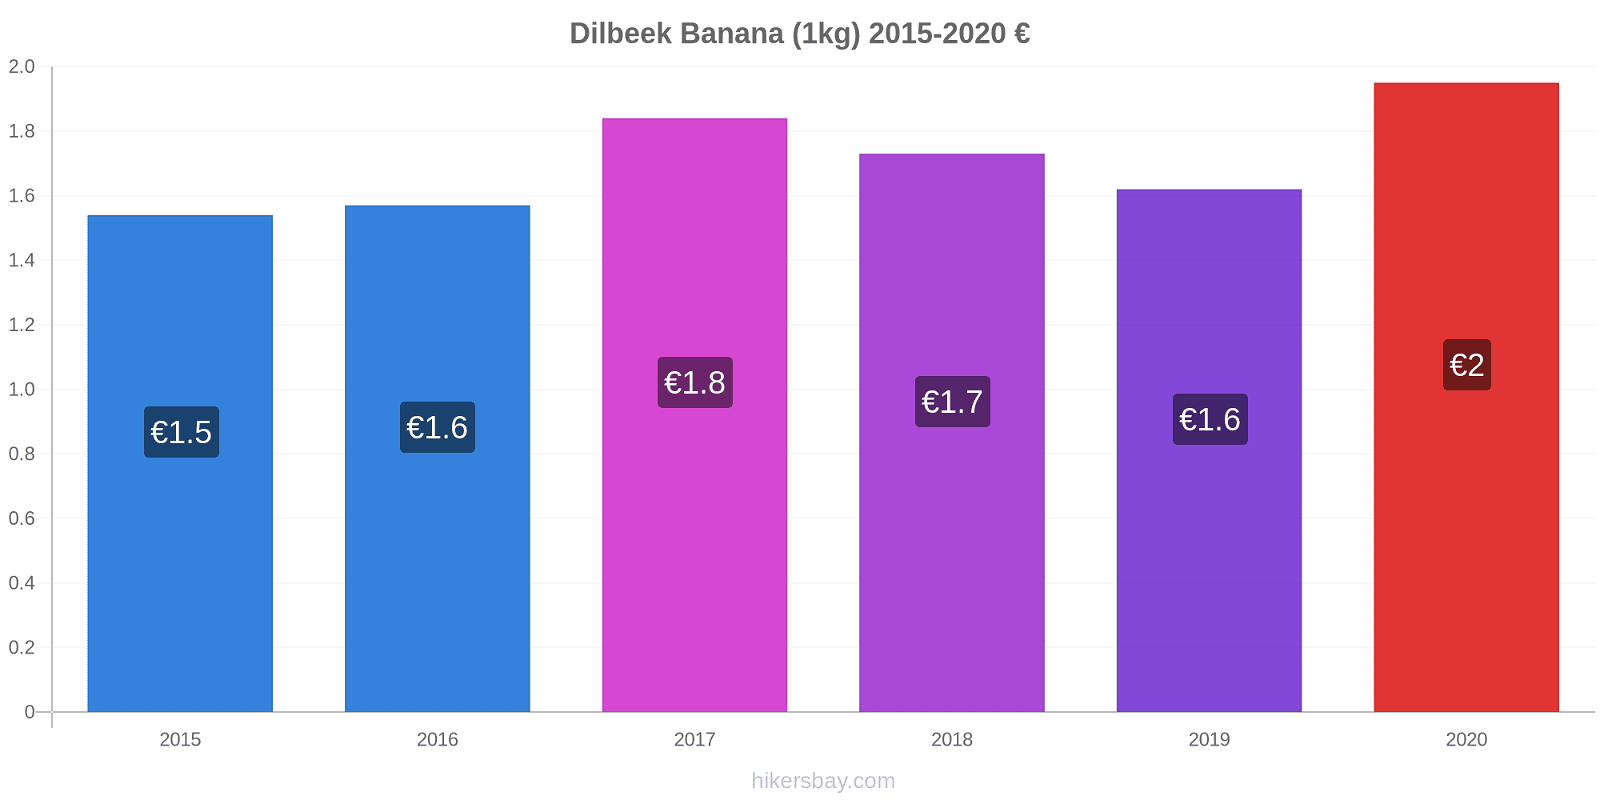 Dilbeek modificări de preț Banana (1kg) hikersbay.com